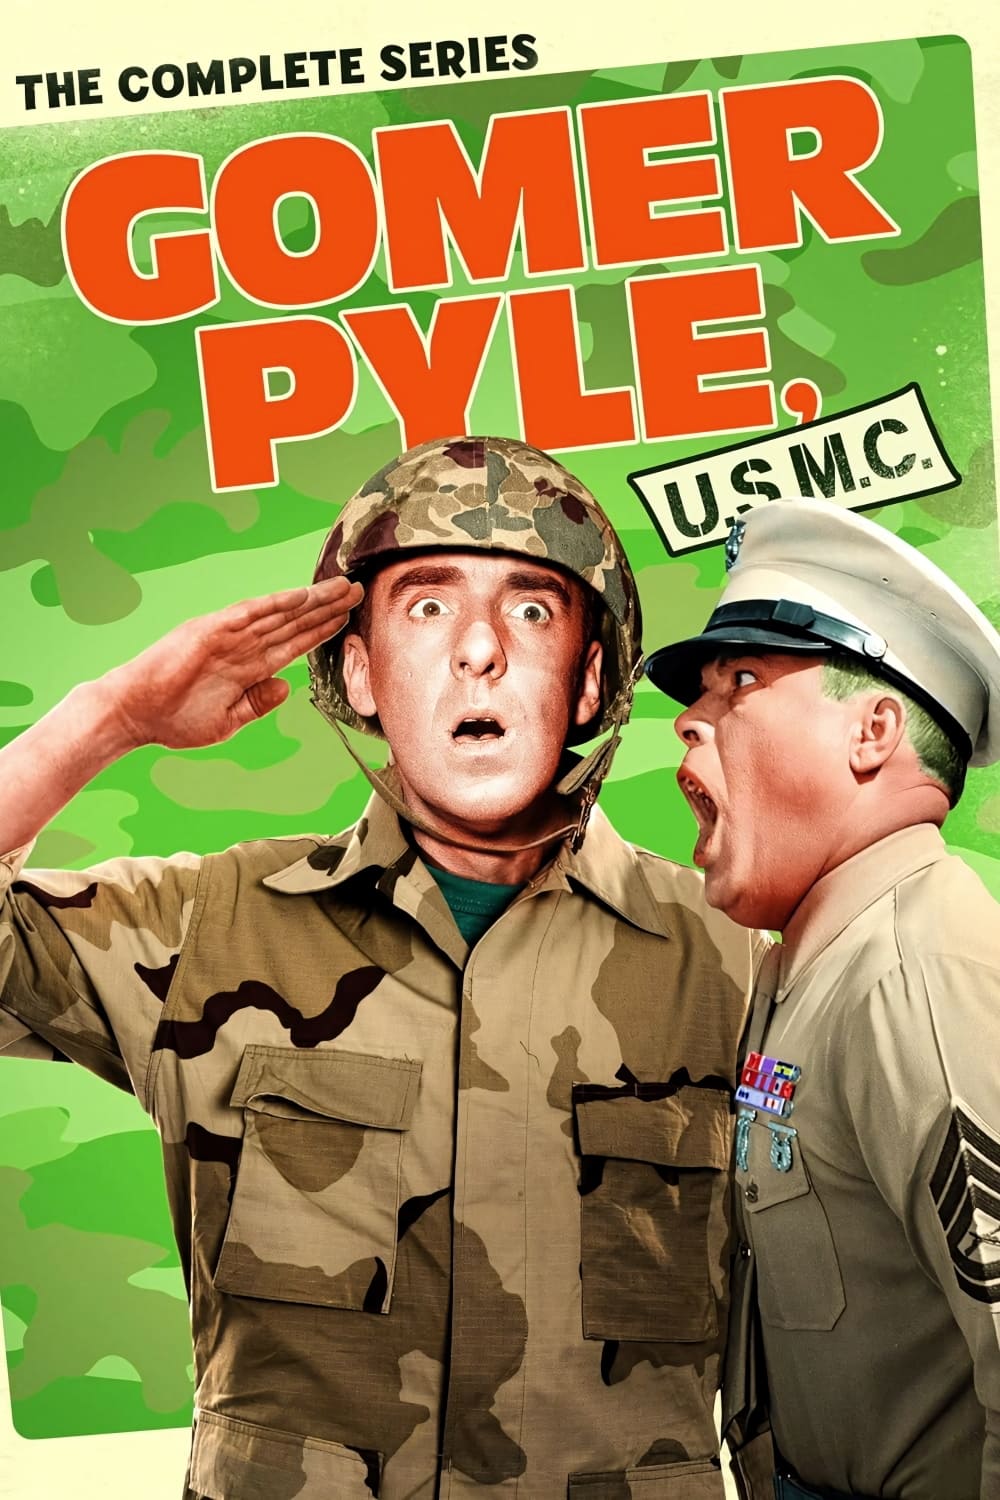 Gomer Pyle, U.S.M.C. (1964)